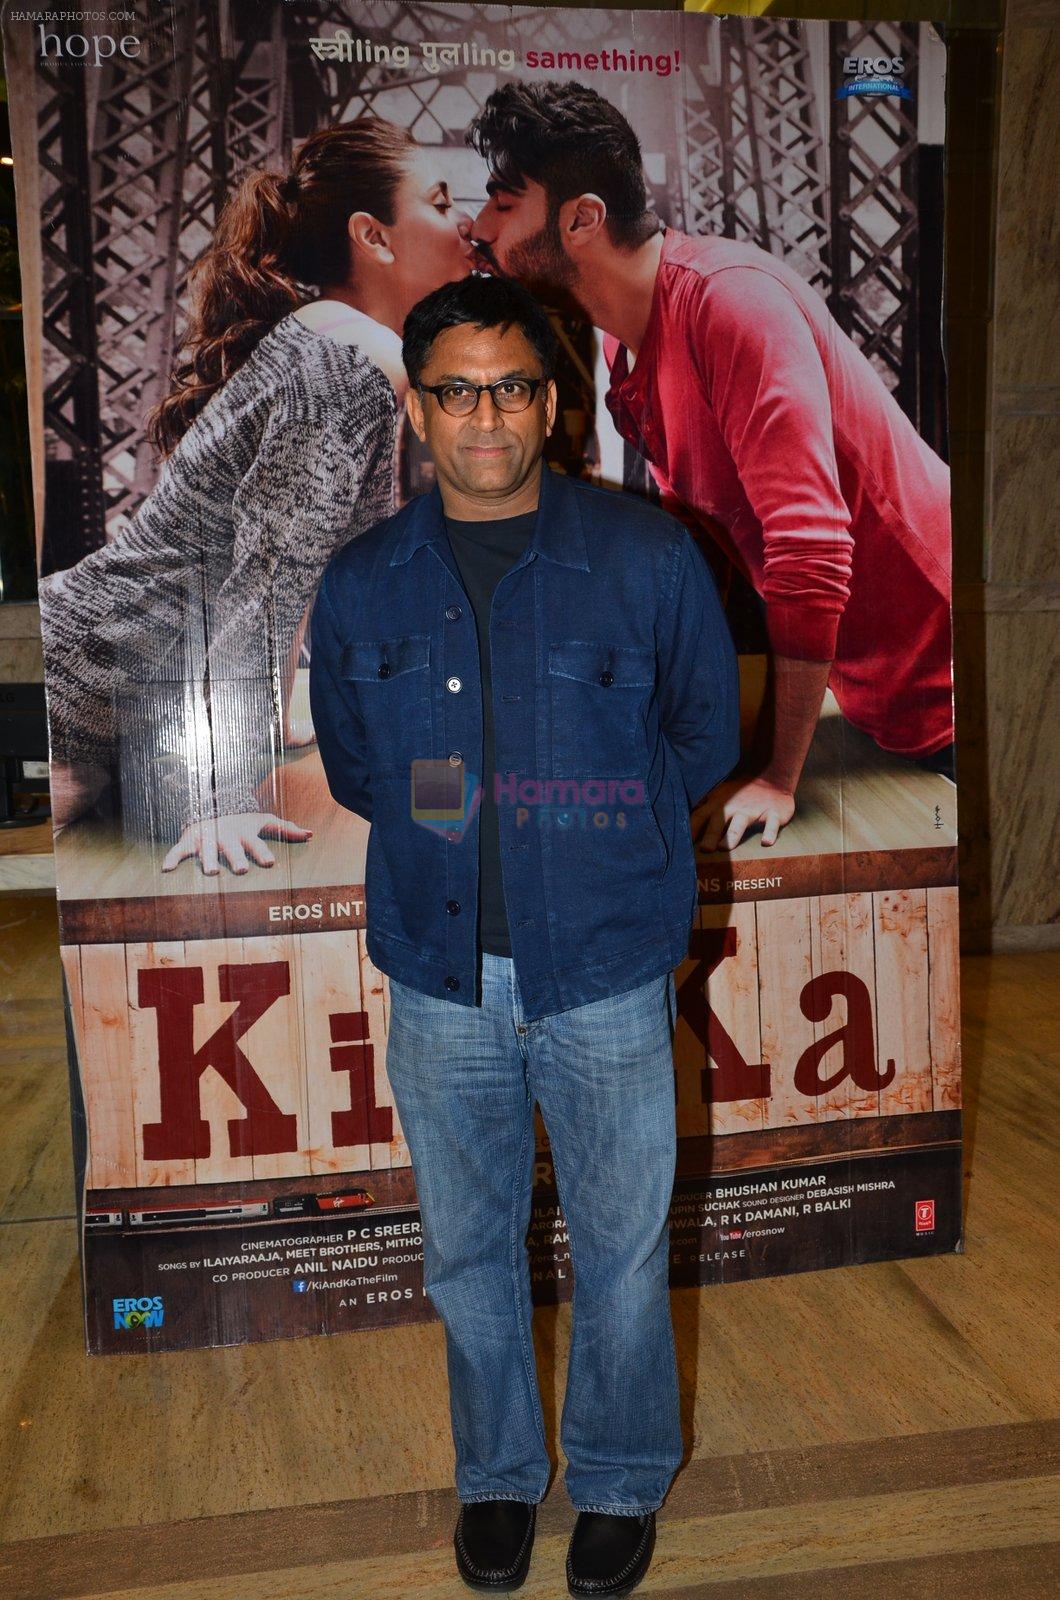 Sriram Raghavan at Ki and Ka screening in Mumbai on 23rd March 2016